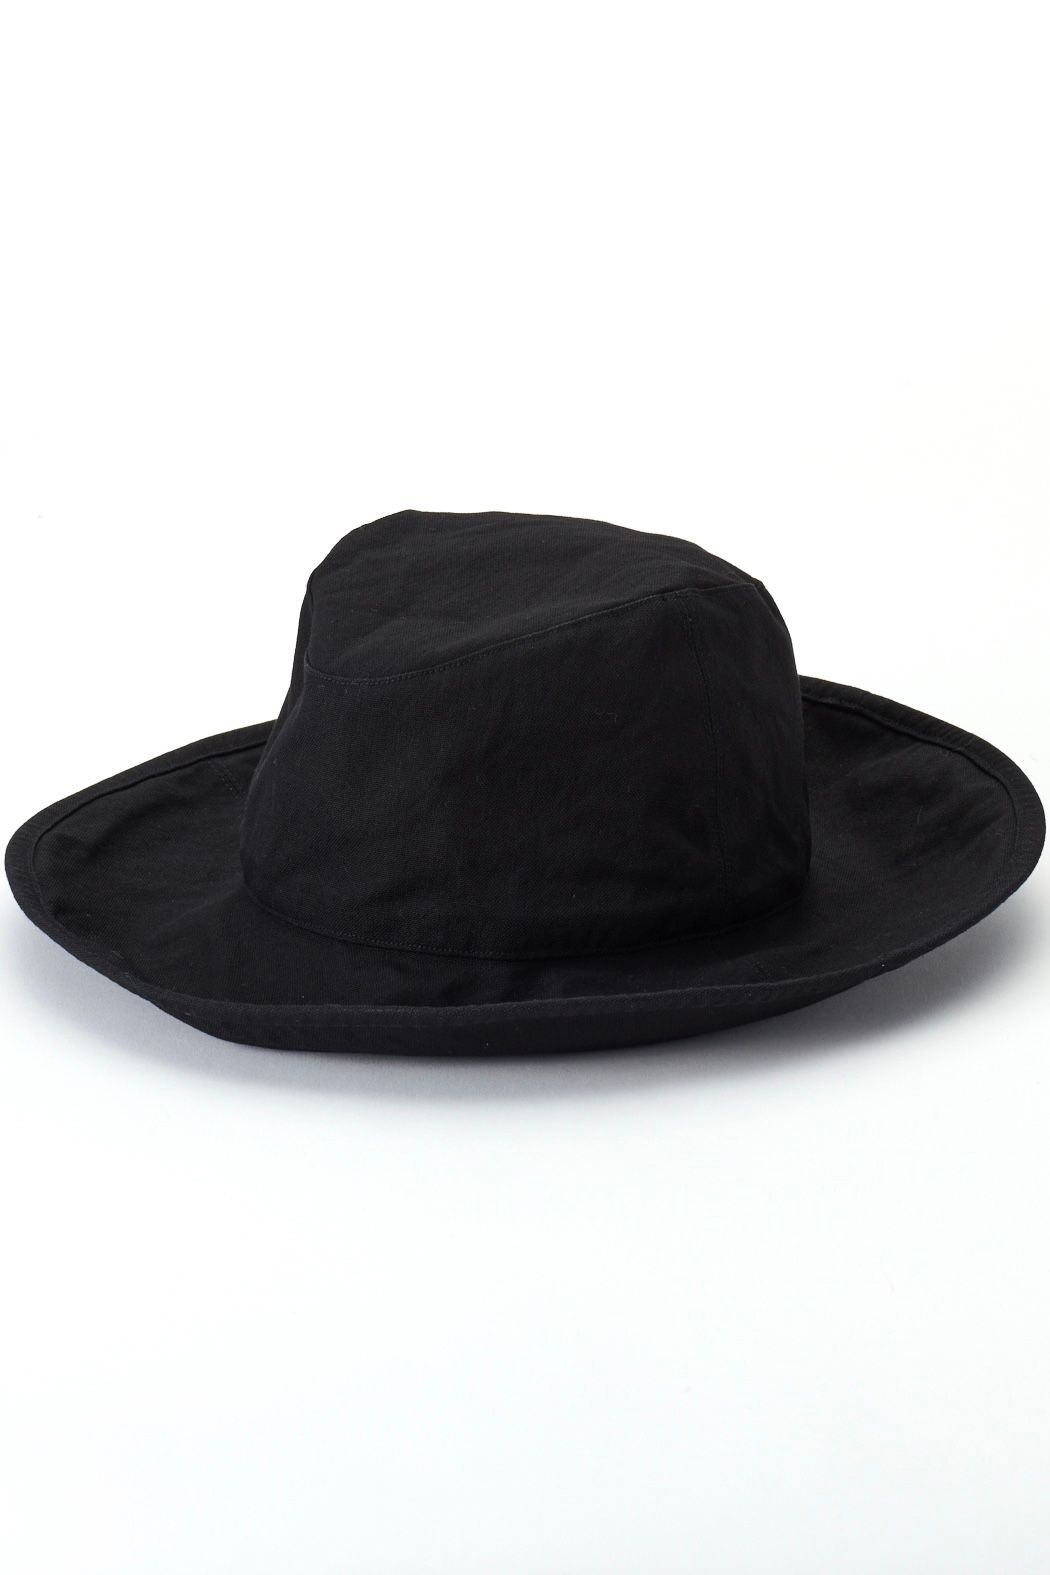 KIJIMA TAKAYUKI - CANVAS SOFT HAT -black- 23aw | asterisk